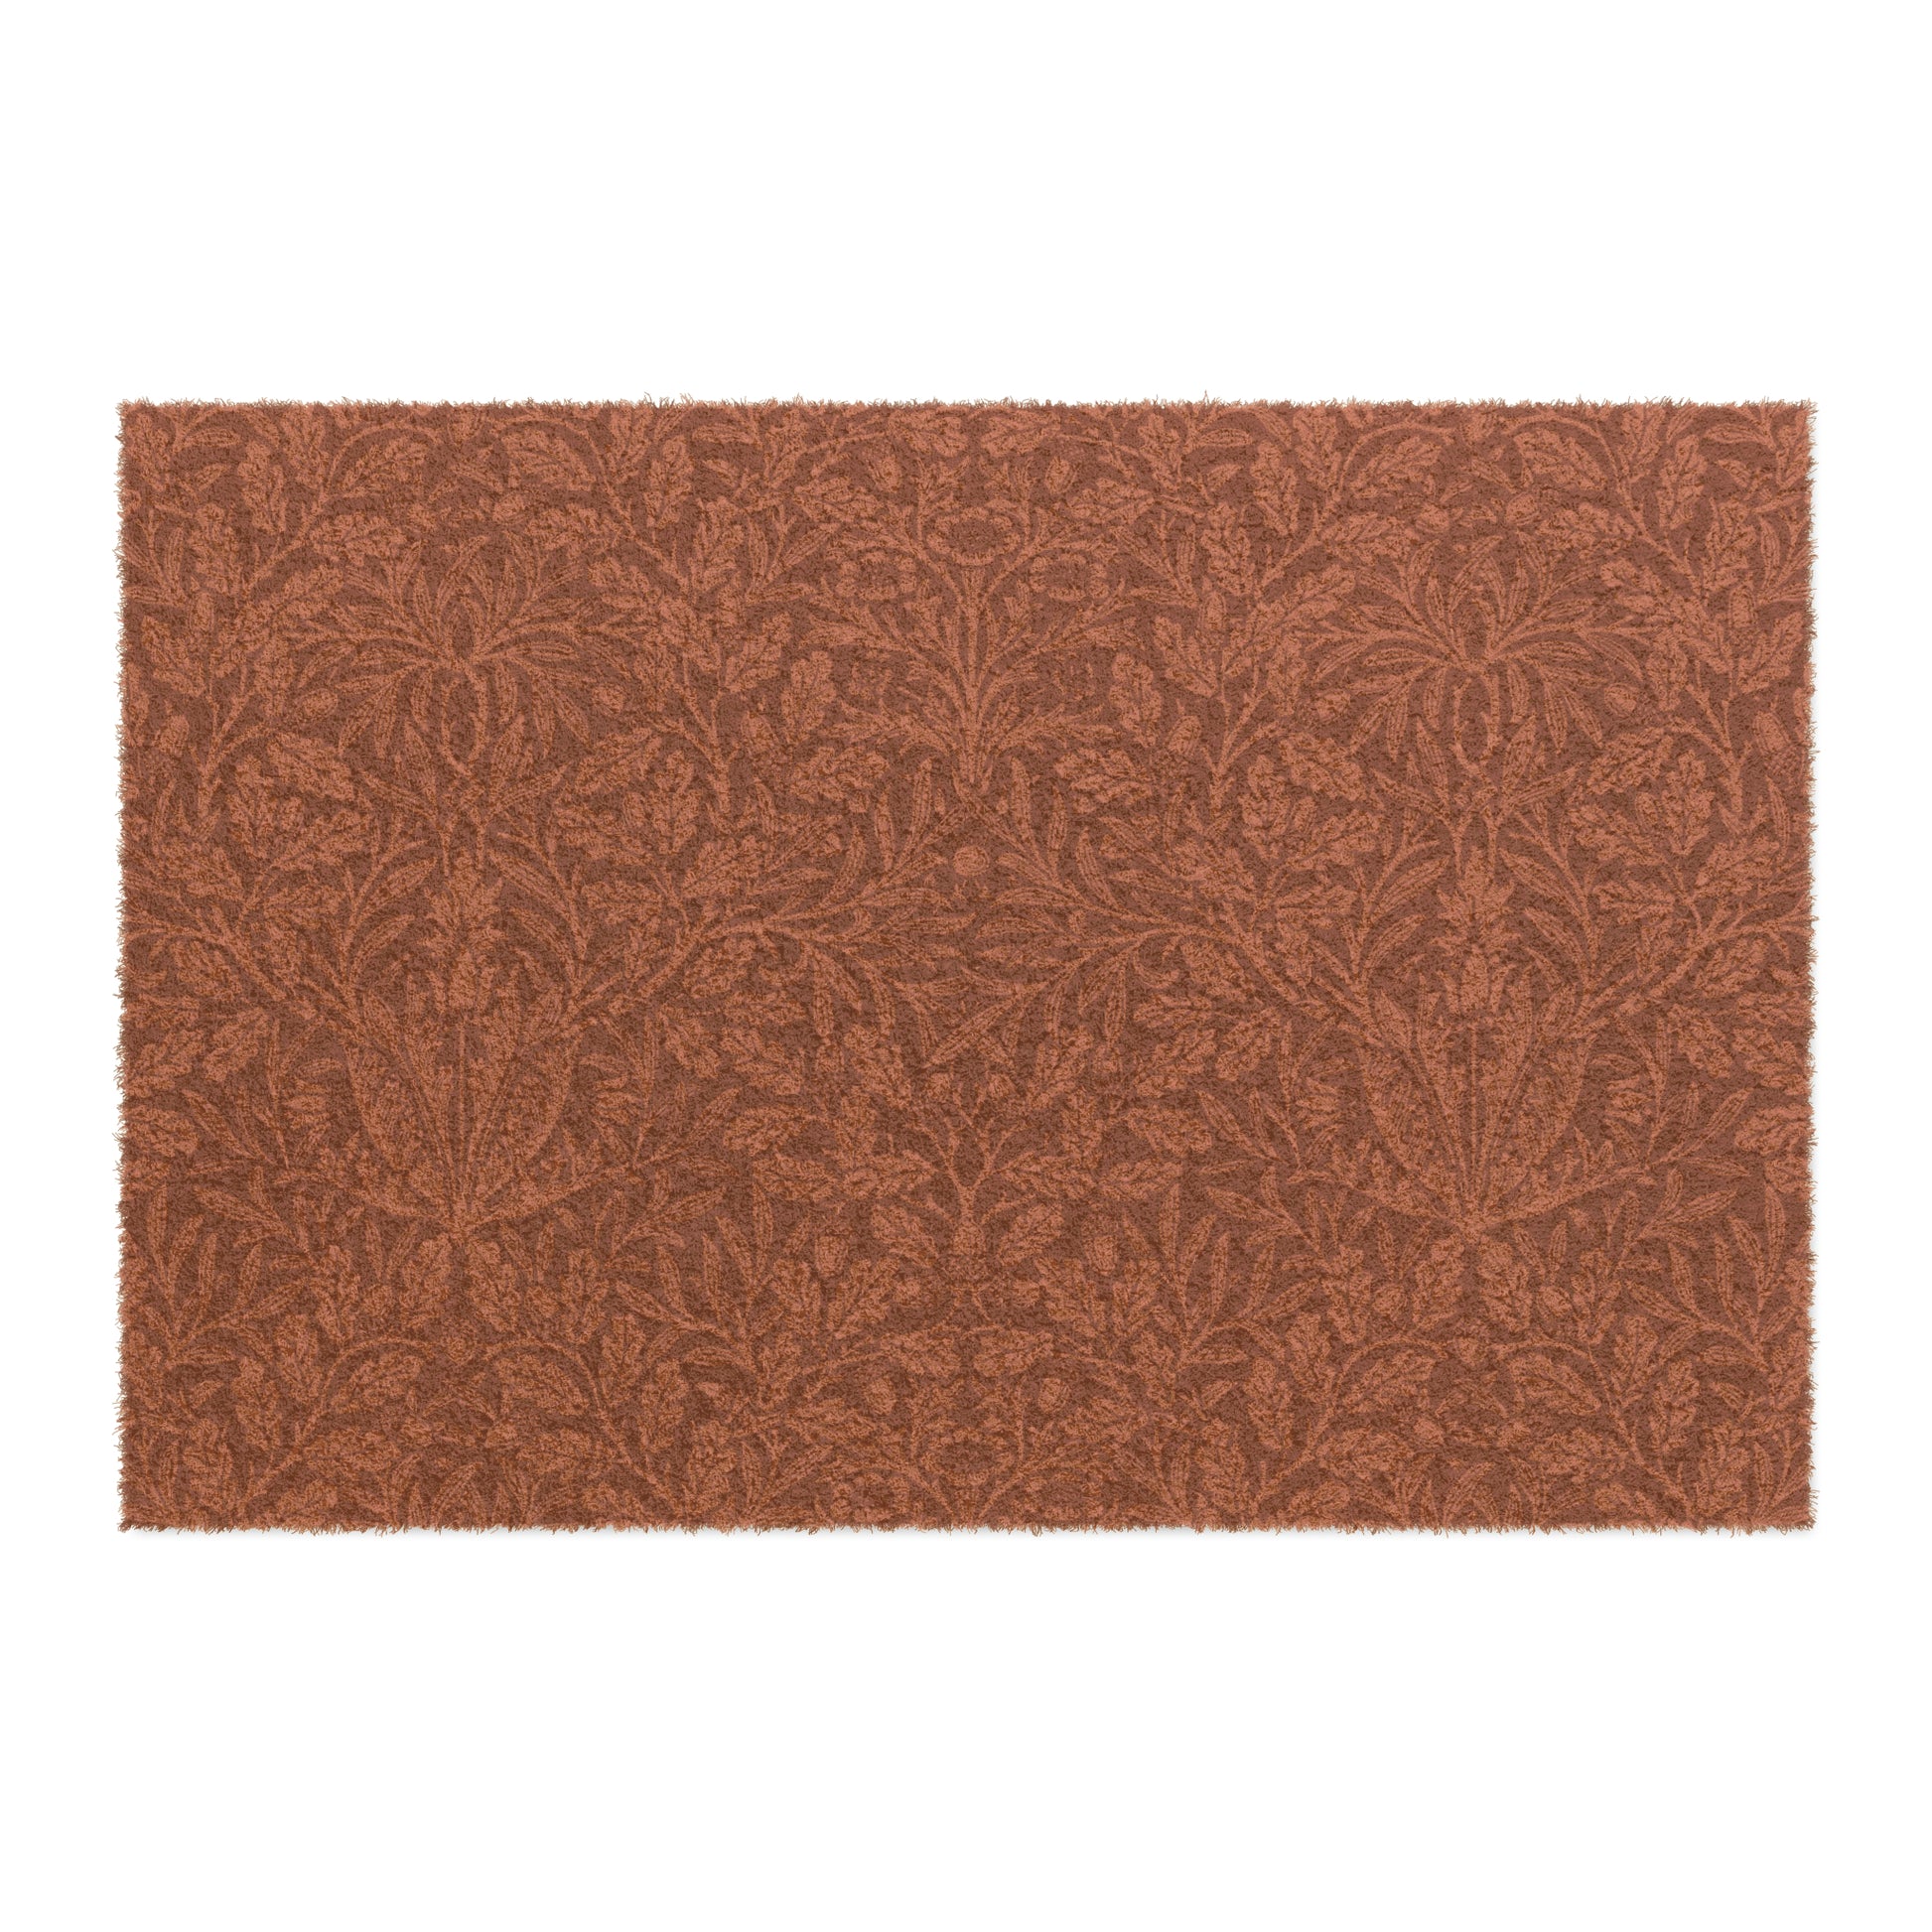 william-morris-co-coconut-coir-doormat-acorns-and-oak-leaves-collection-rust-1